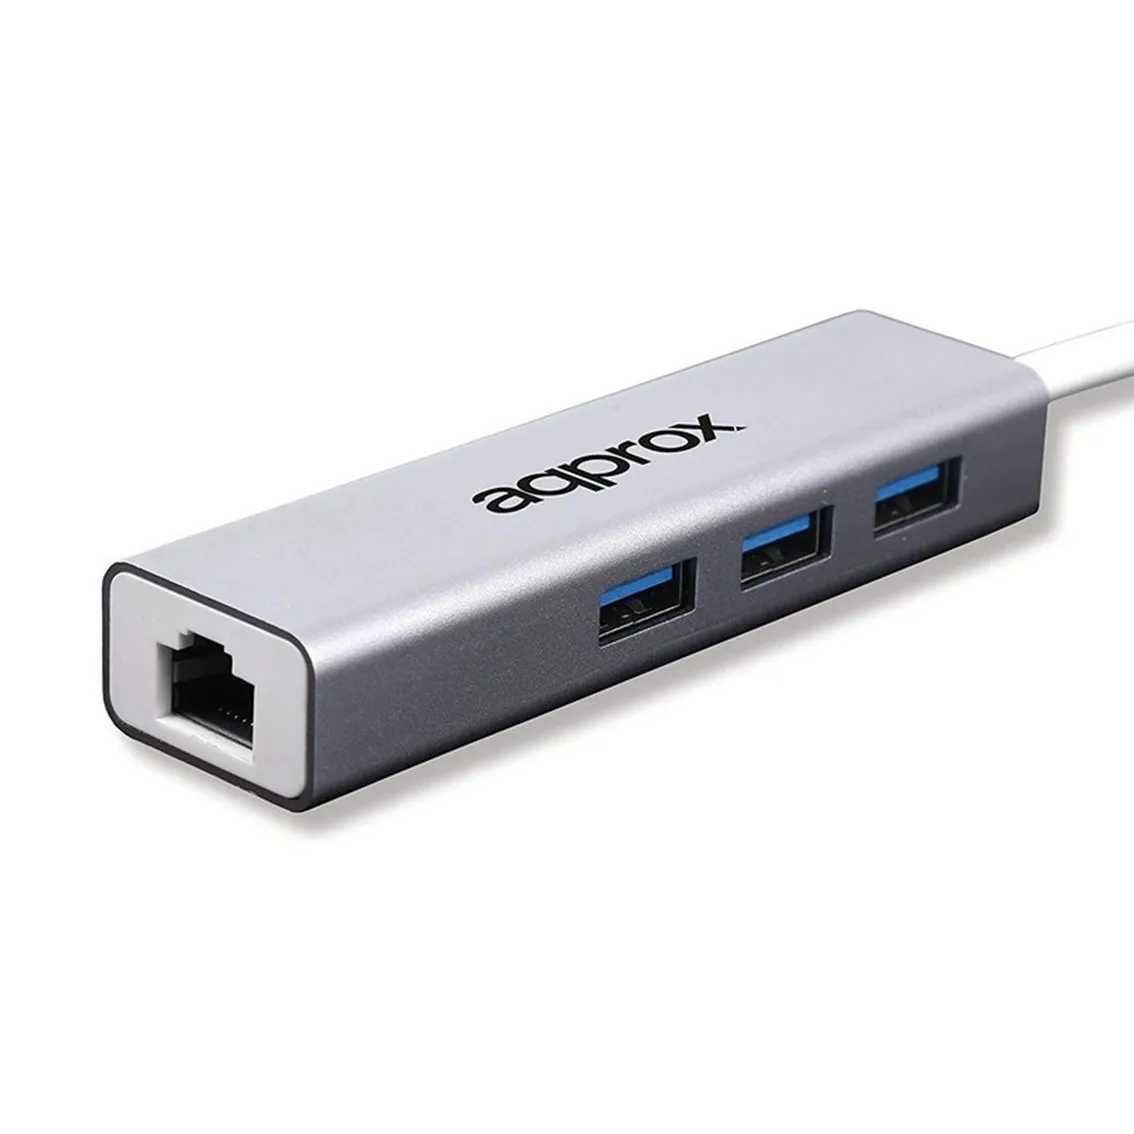 approx APPC07GHUB Adaptador USB 3.0 Gigabit + HUB